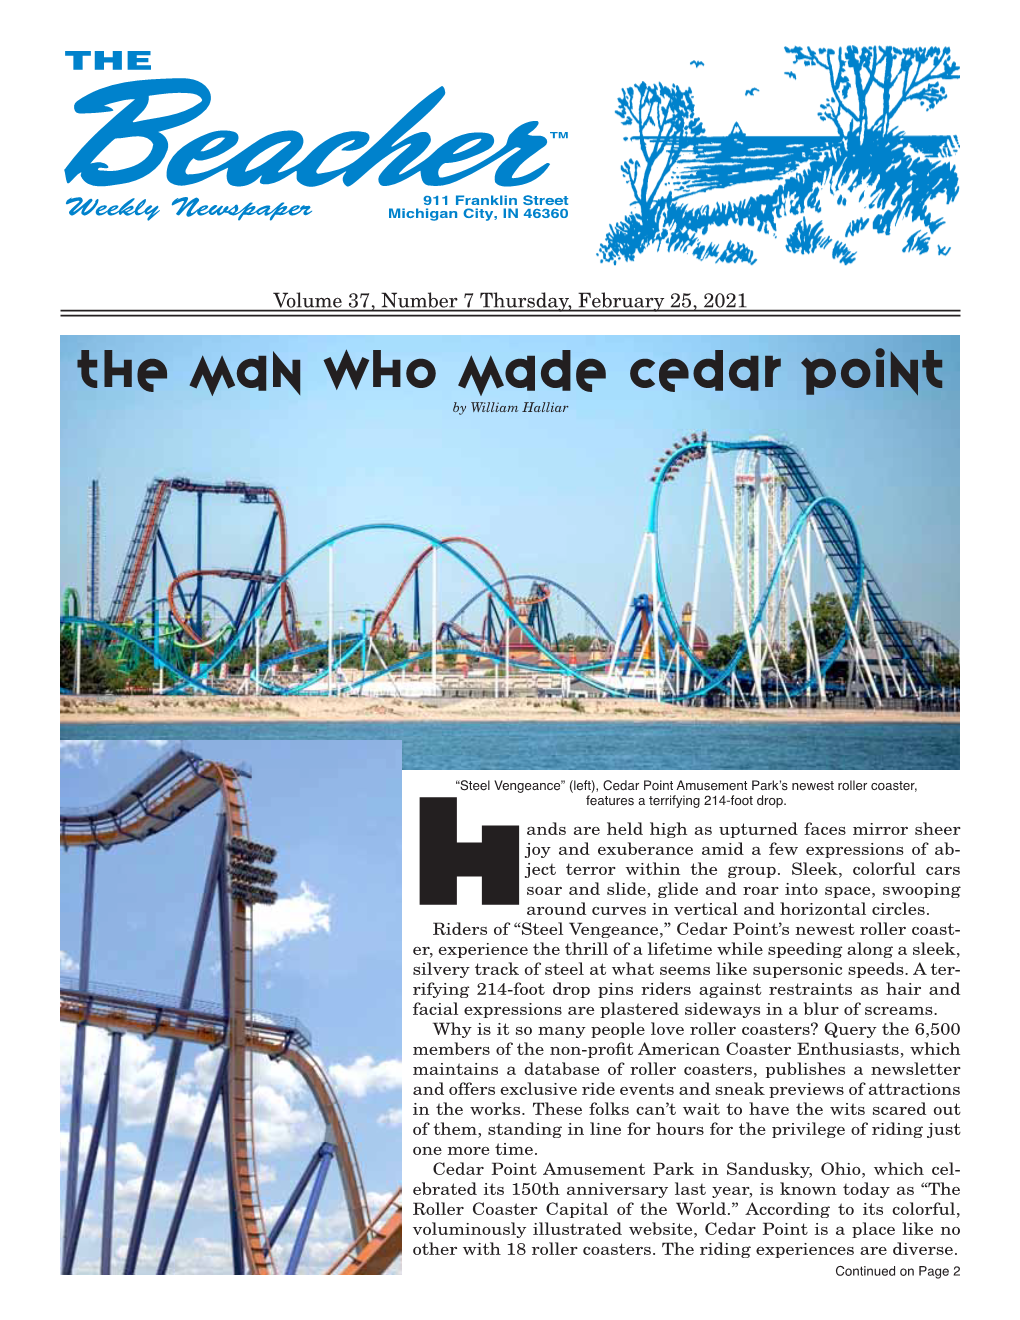 The Man Who Made Cedar Point by William Halliar